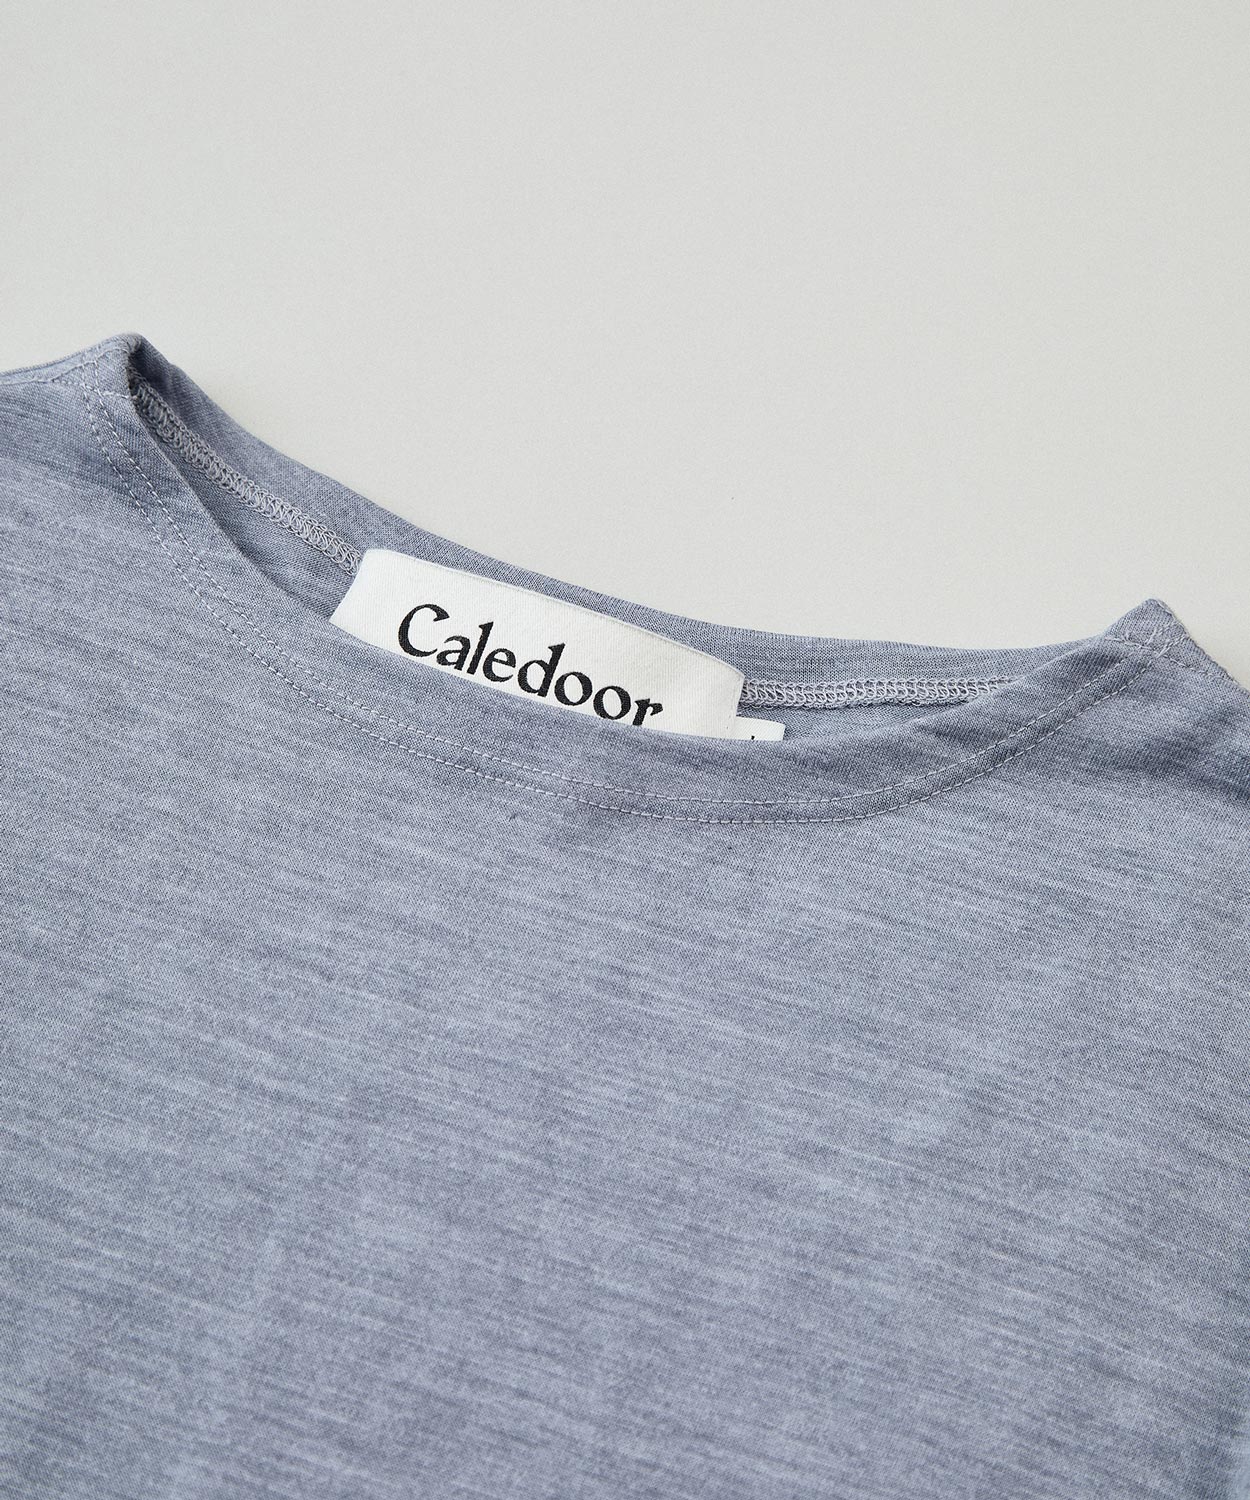 Caledoor カレドアー サマーメリノウールTシャツ 全3色